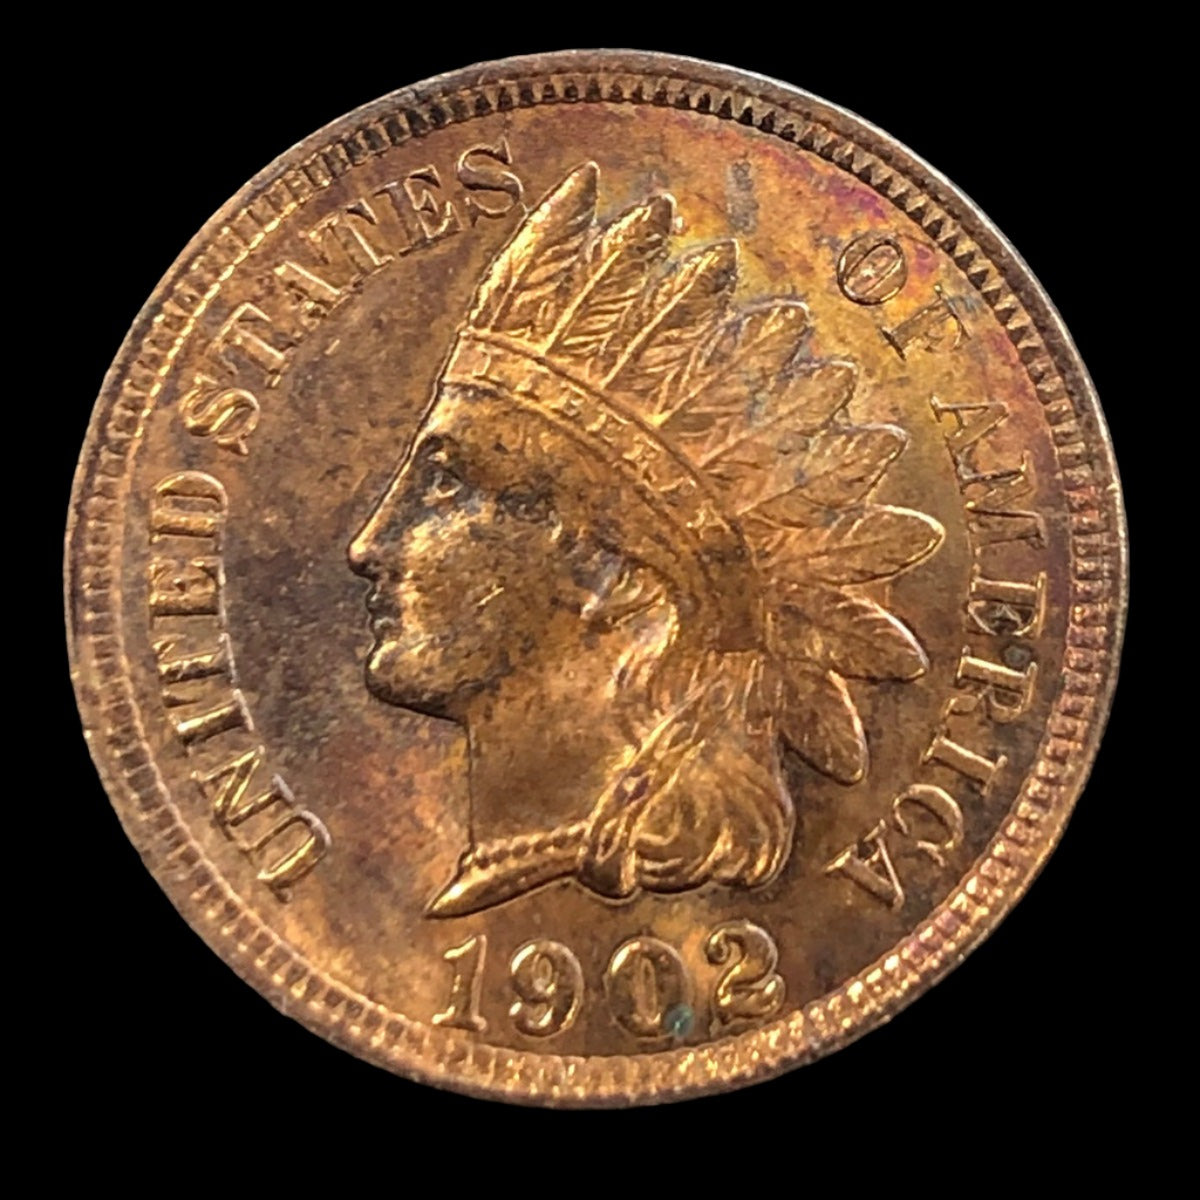 1902 Indian Head Cent (BU)